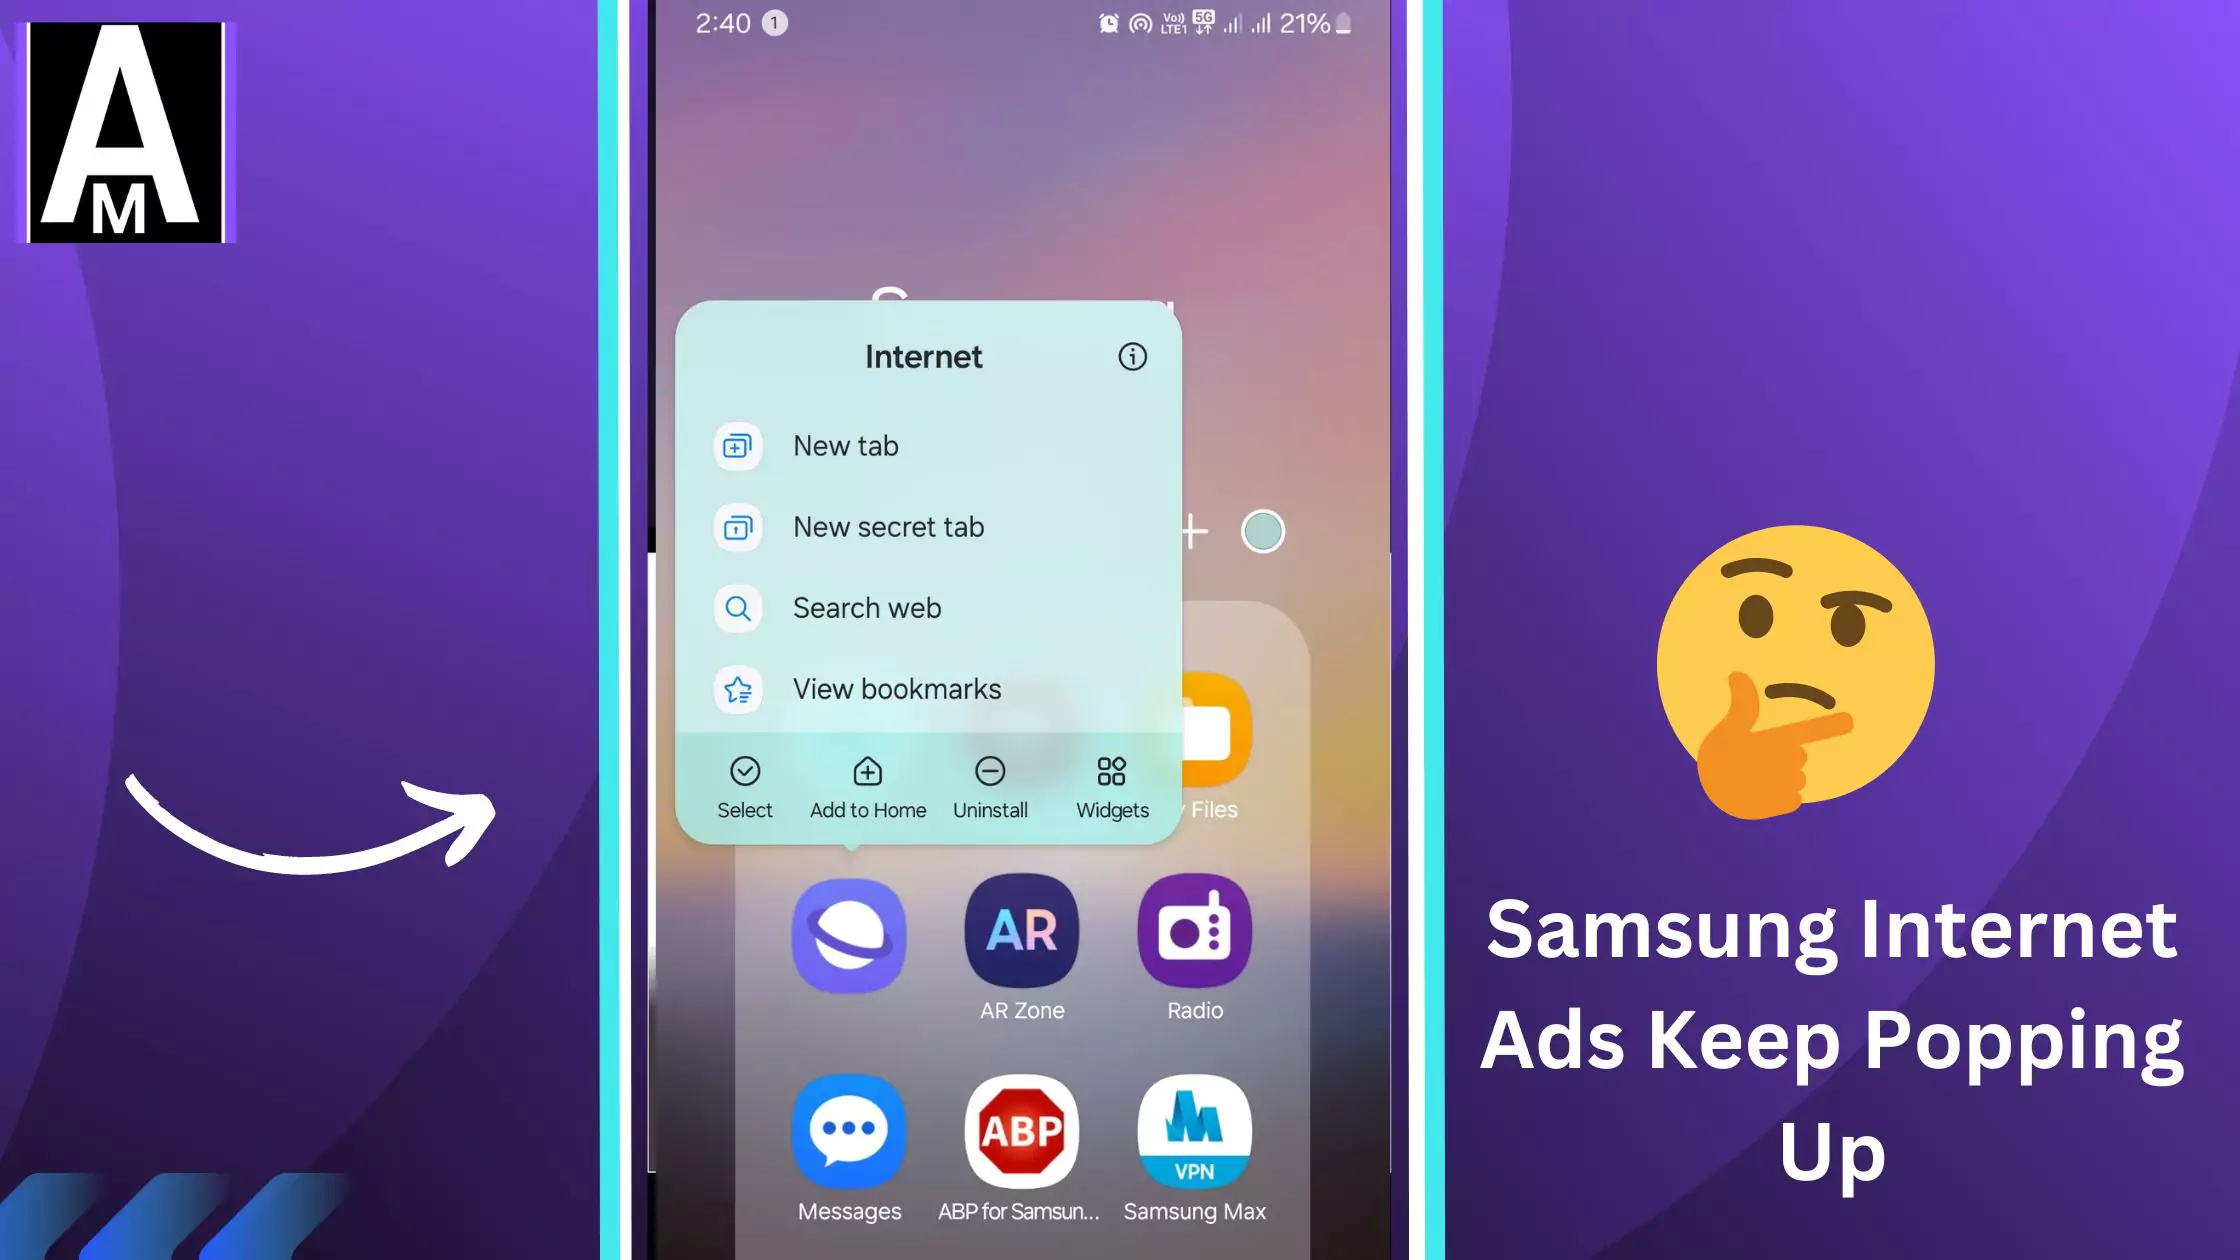 sasmung internet app info menu with overlay text Samsung Internet Ads Keep Popping Up